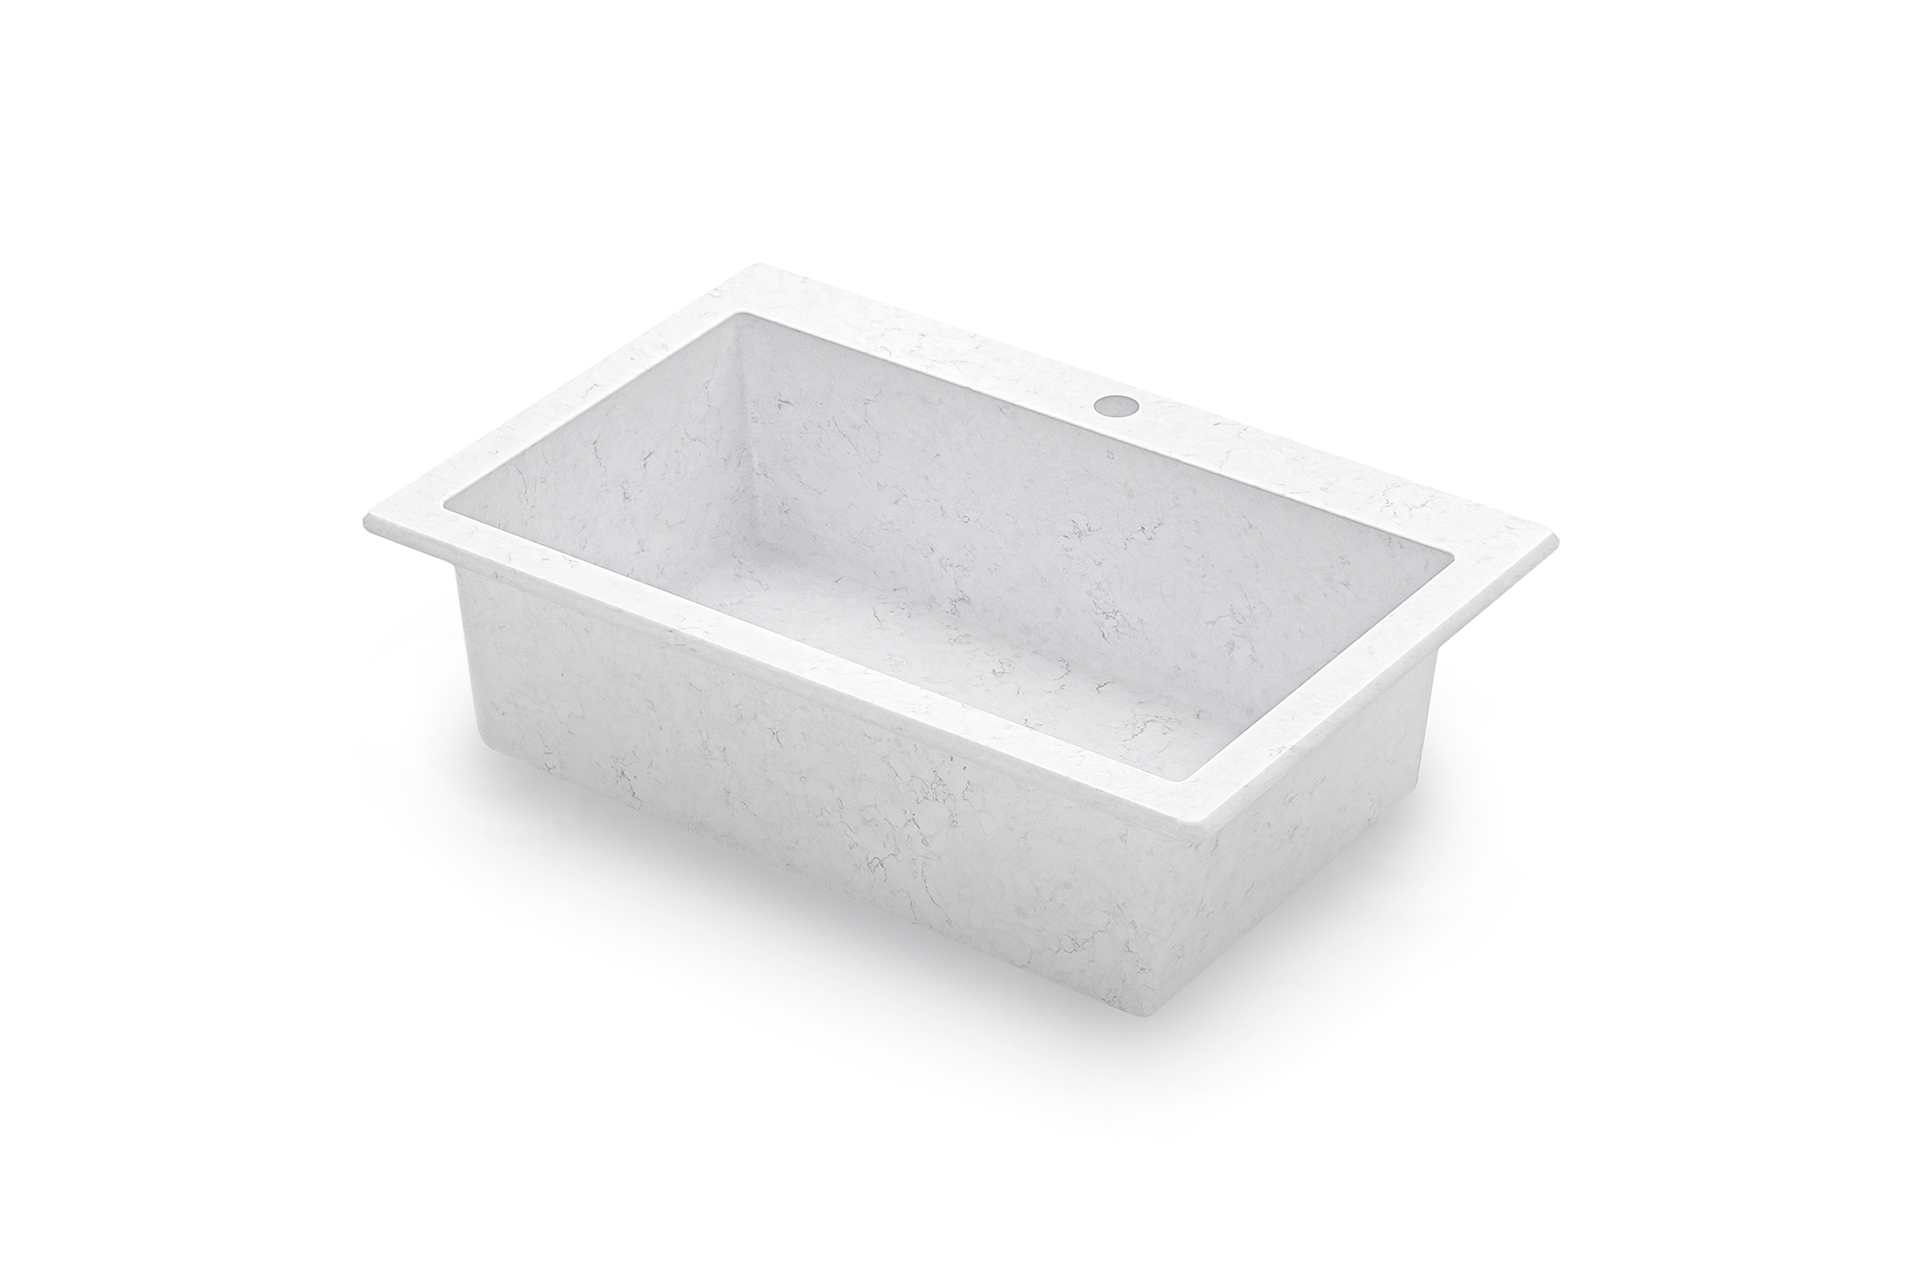 Quartz Sink: A Top Notch Material For Modern Kitchens